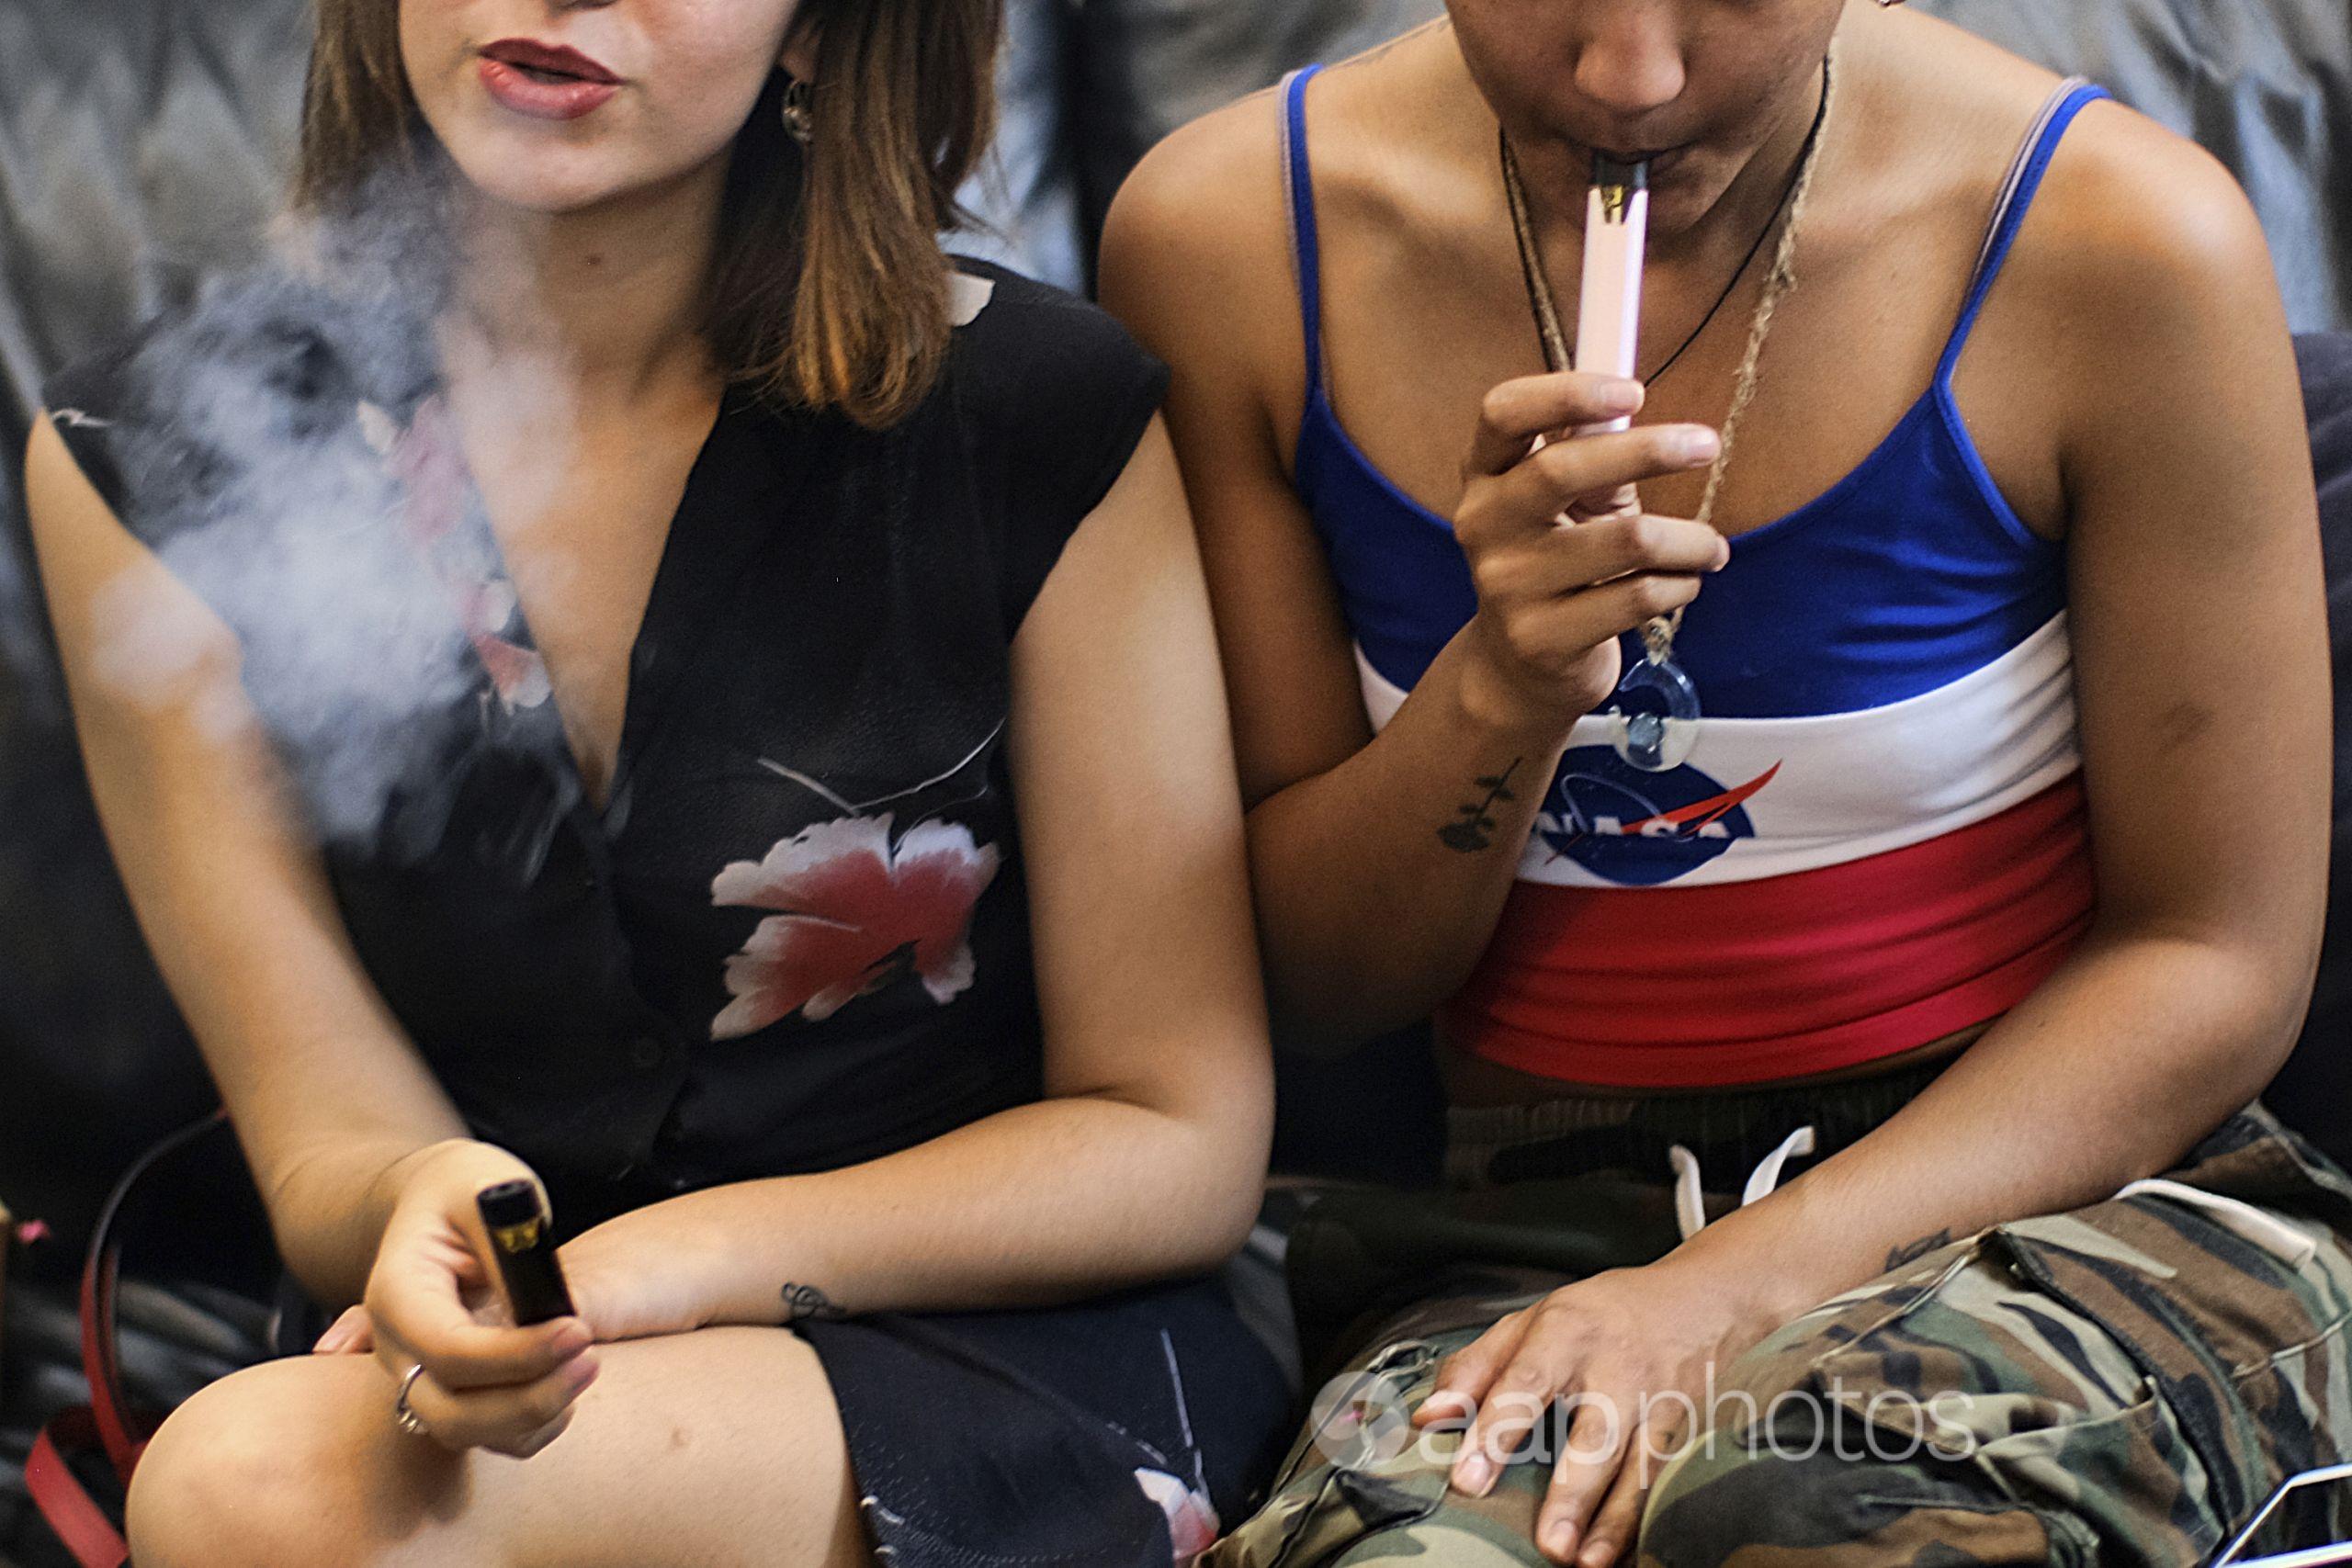 Youths smoking Cannabis